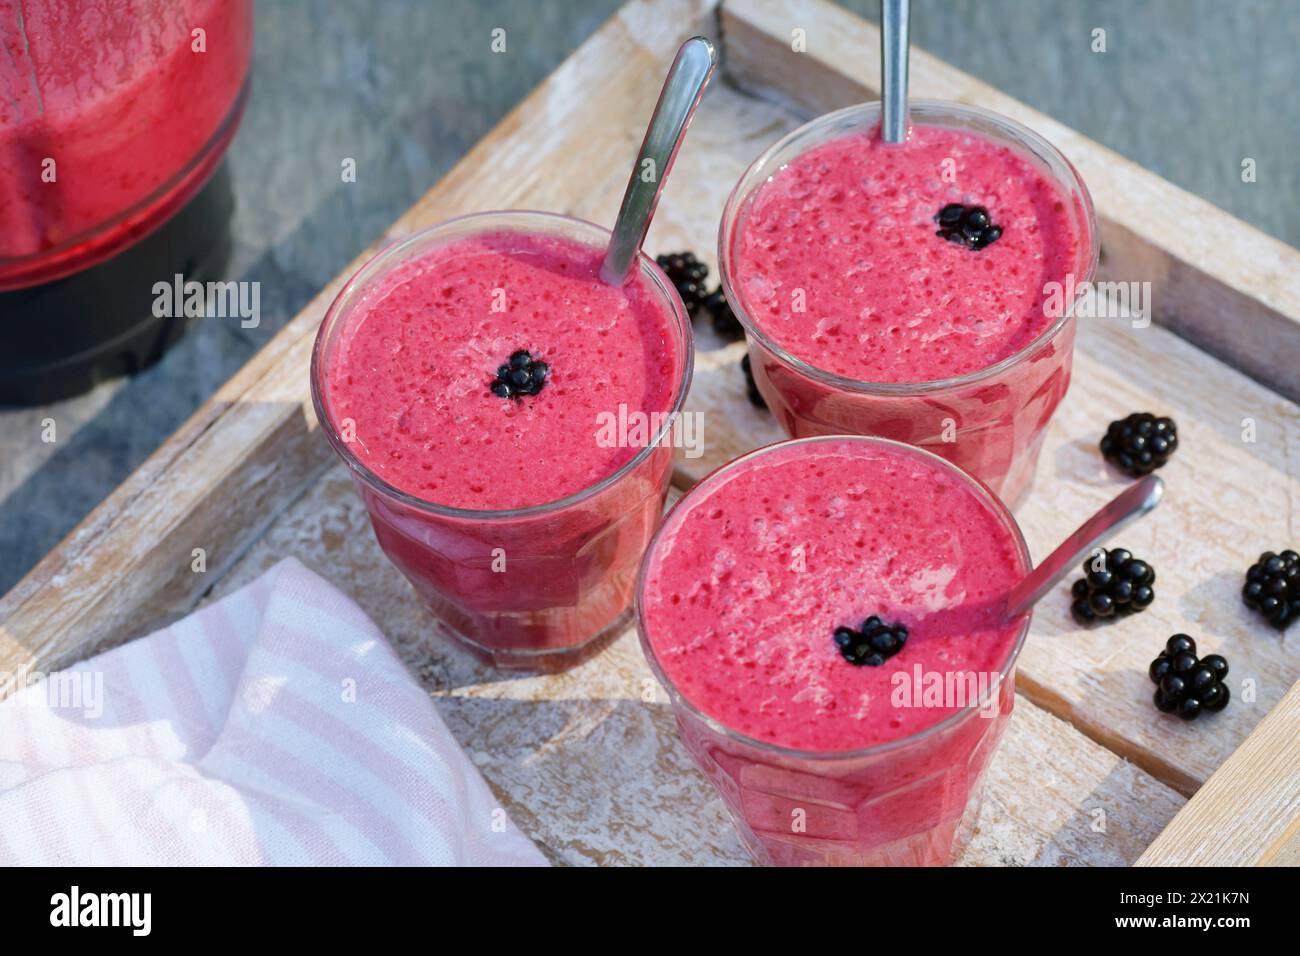 selfmade vegan blackberry milkshake, step 5: ready-made milkshakes, series image 5/5 Stock Photo